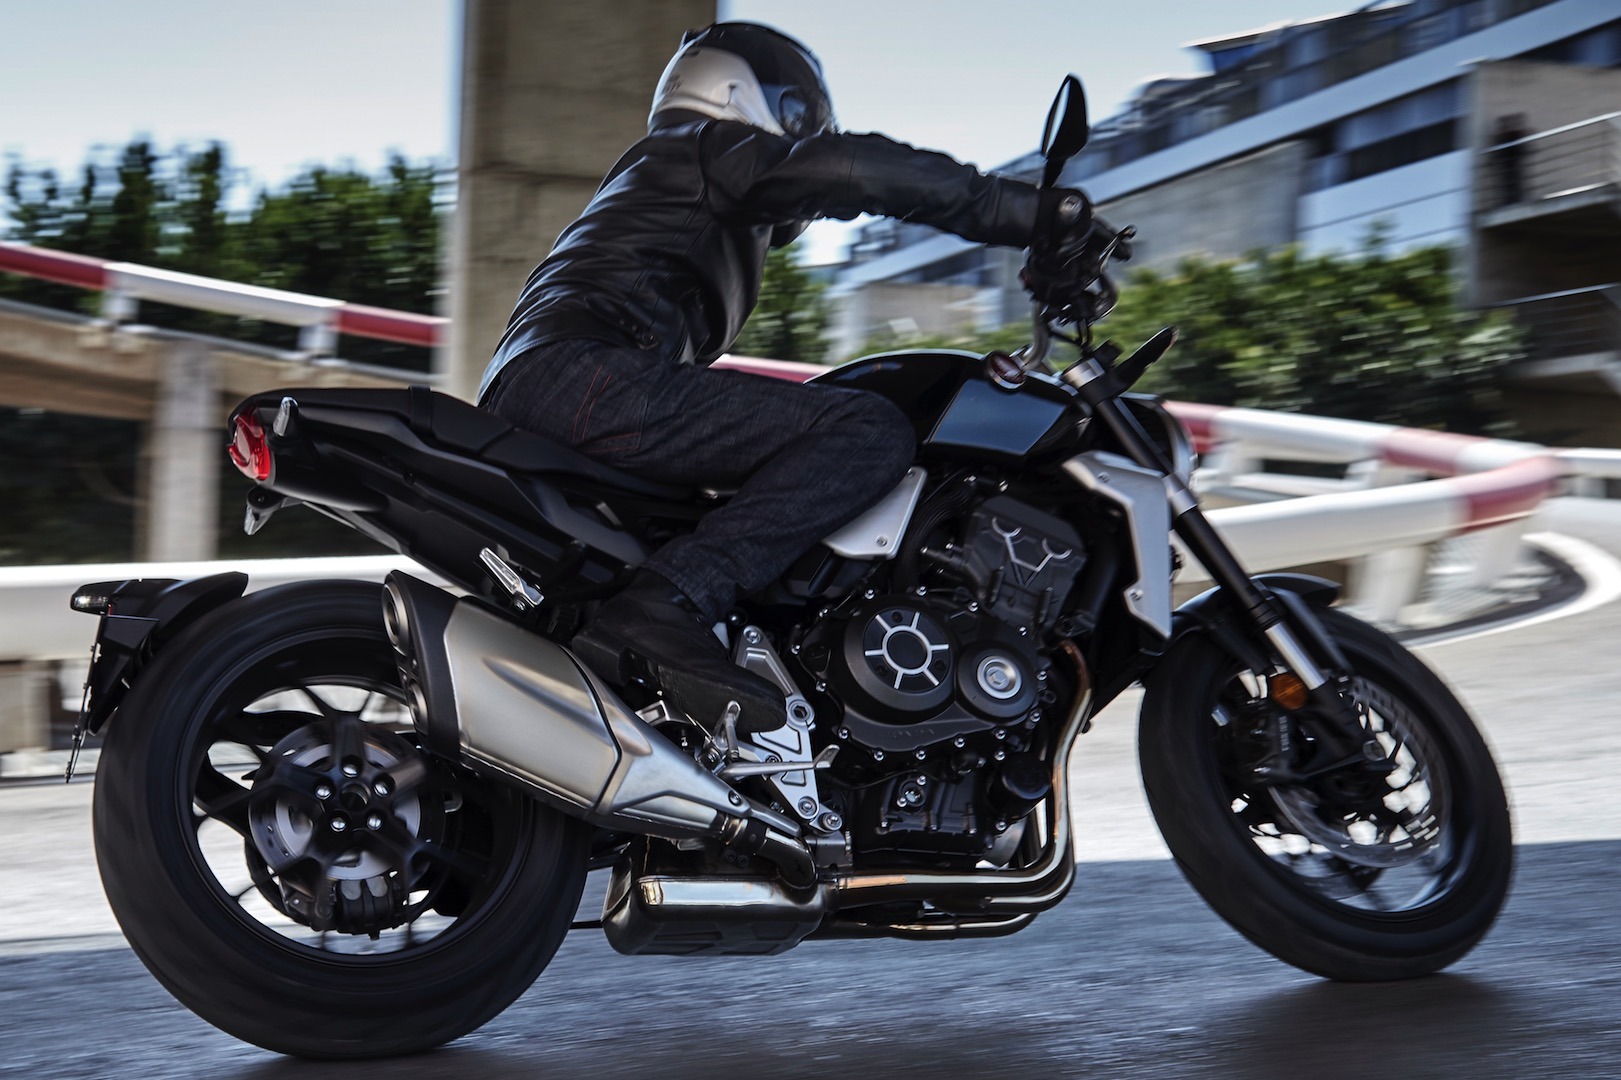 2018-Honda-CB1000R-First-Look-naked-sport-motorcycle-7.jpg